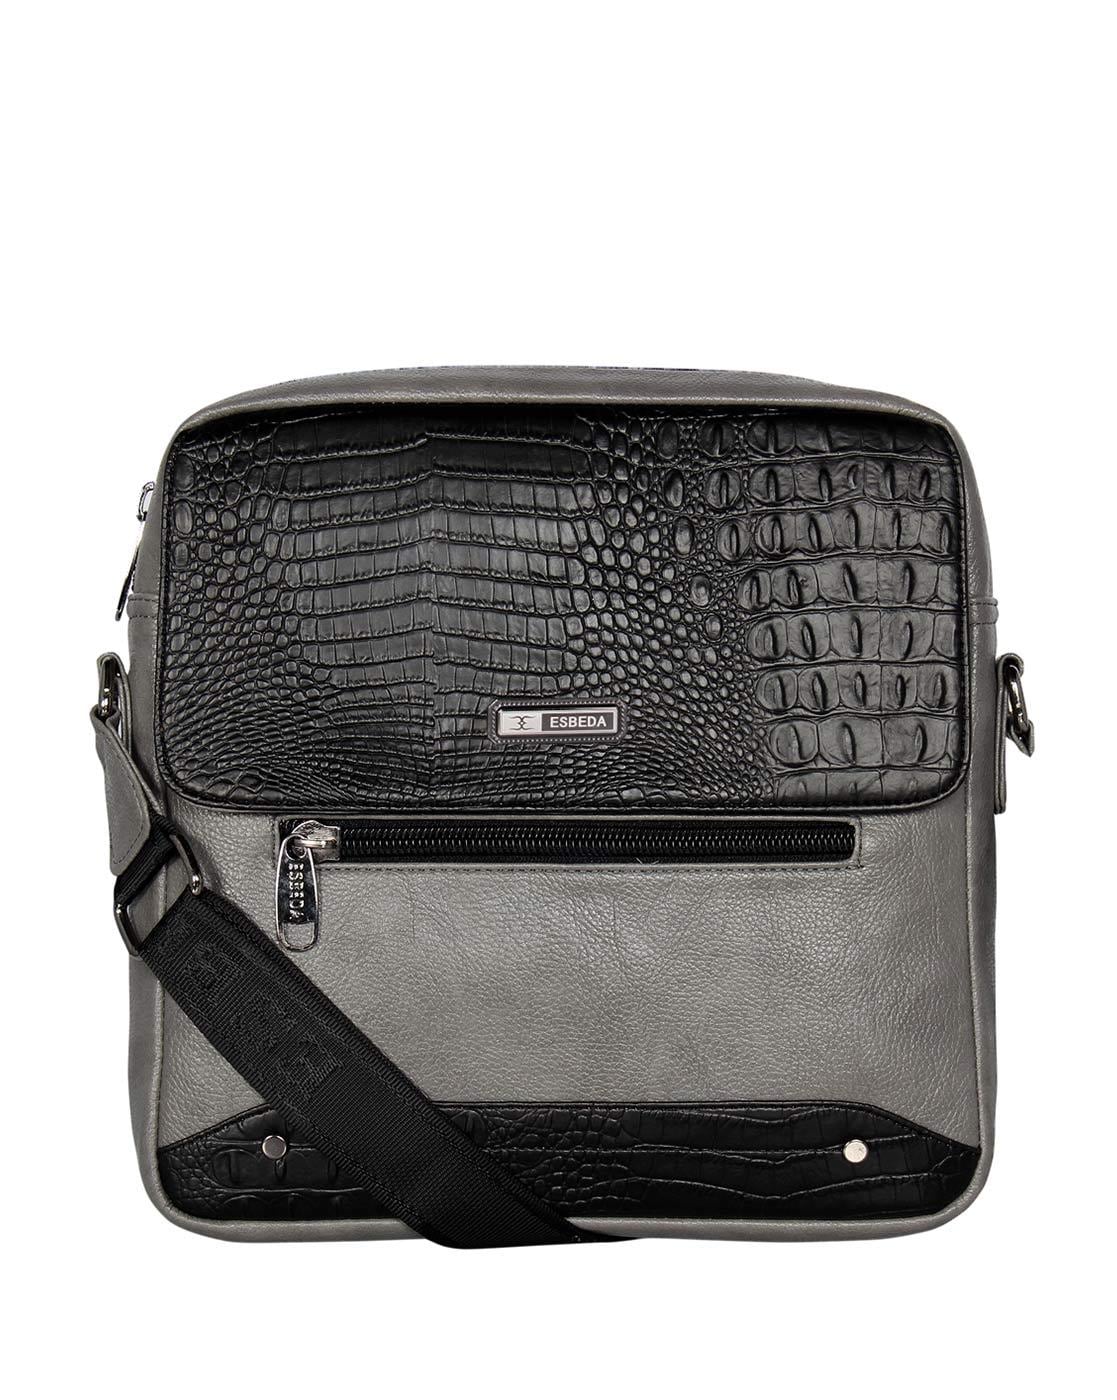 ESBEDA Black Color Tiny Dot Texture Sling Bag For Women